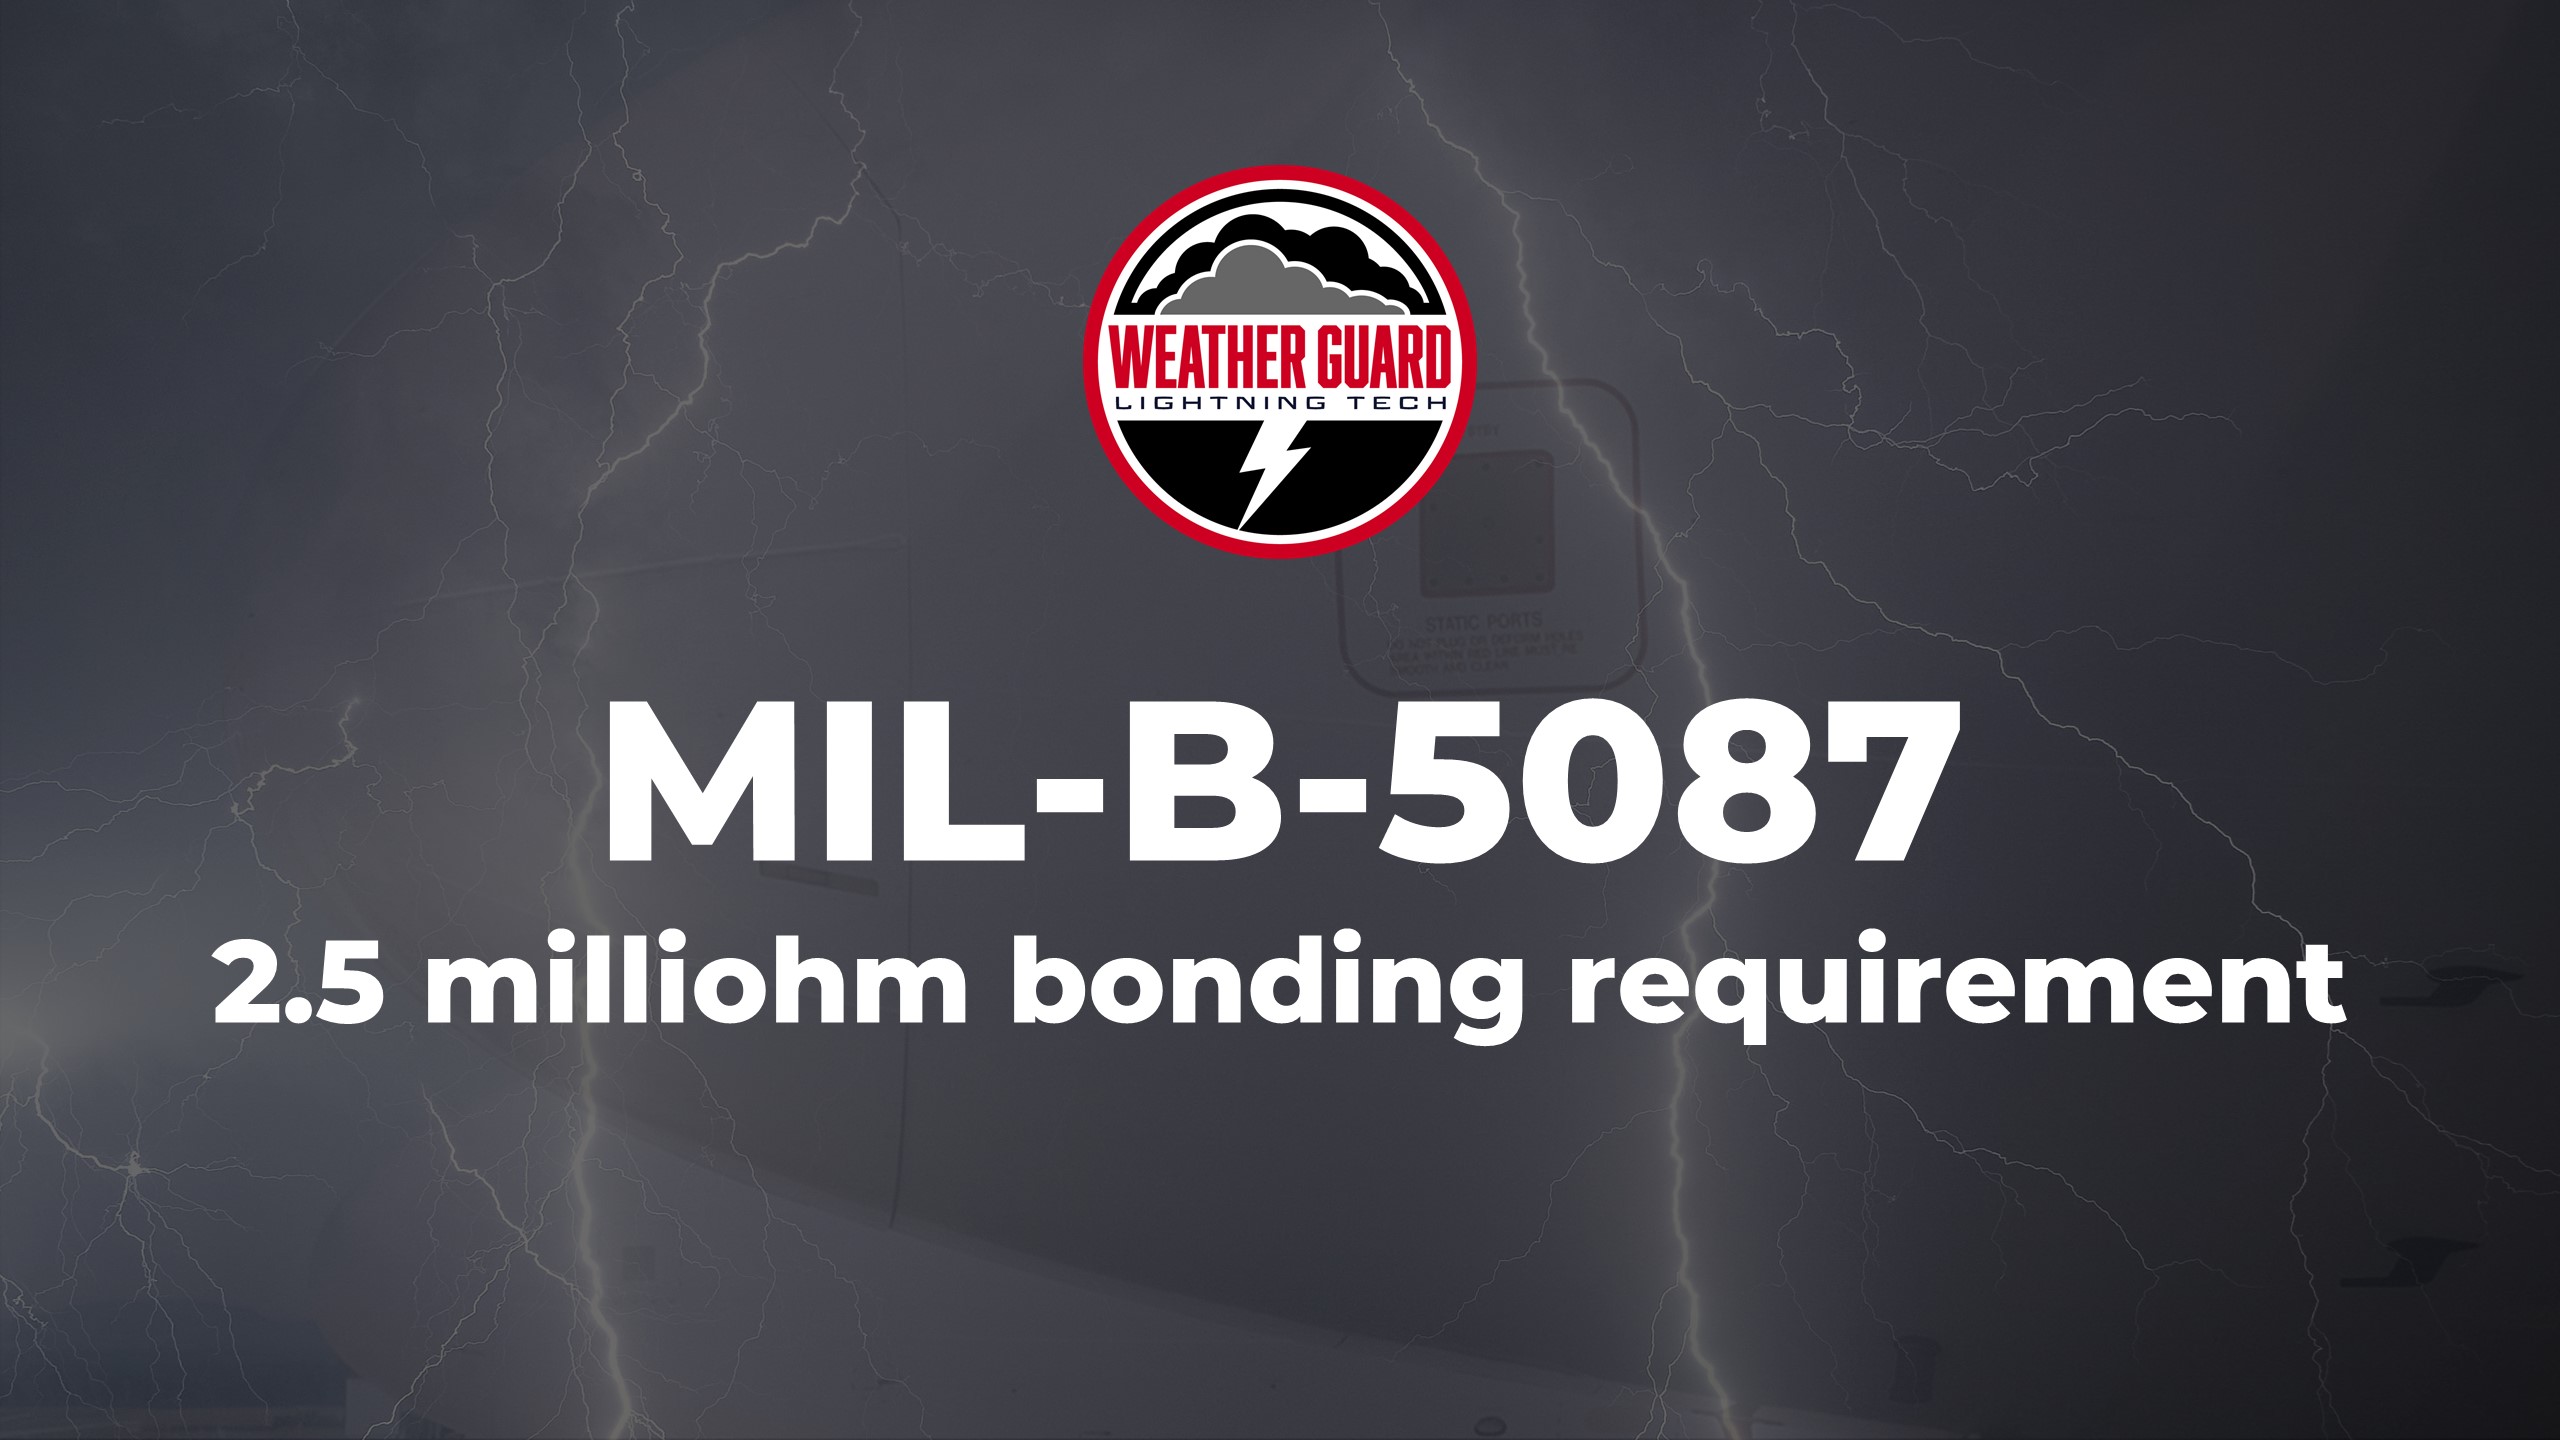 mil-b-5087 2.5 milliohm bonding requirement lightning protection